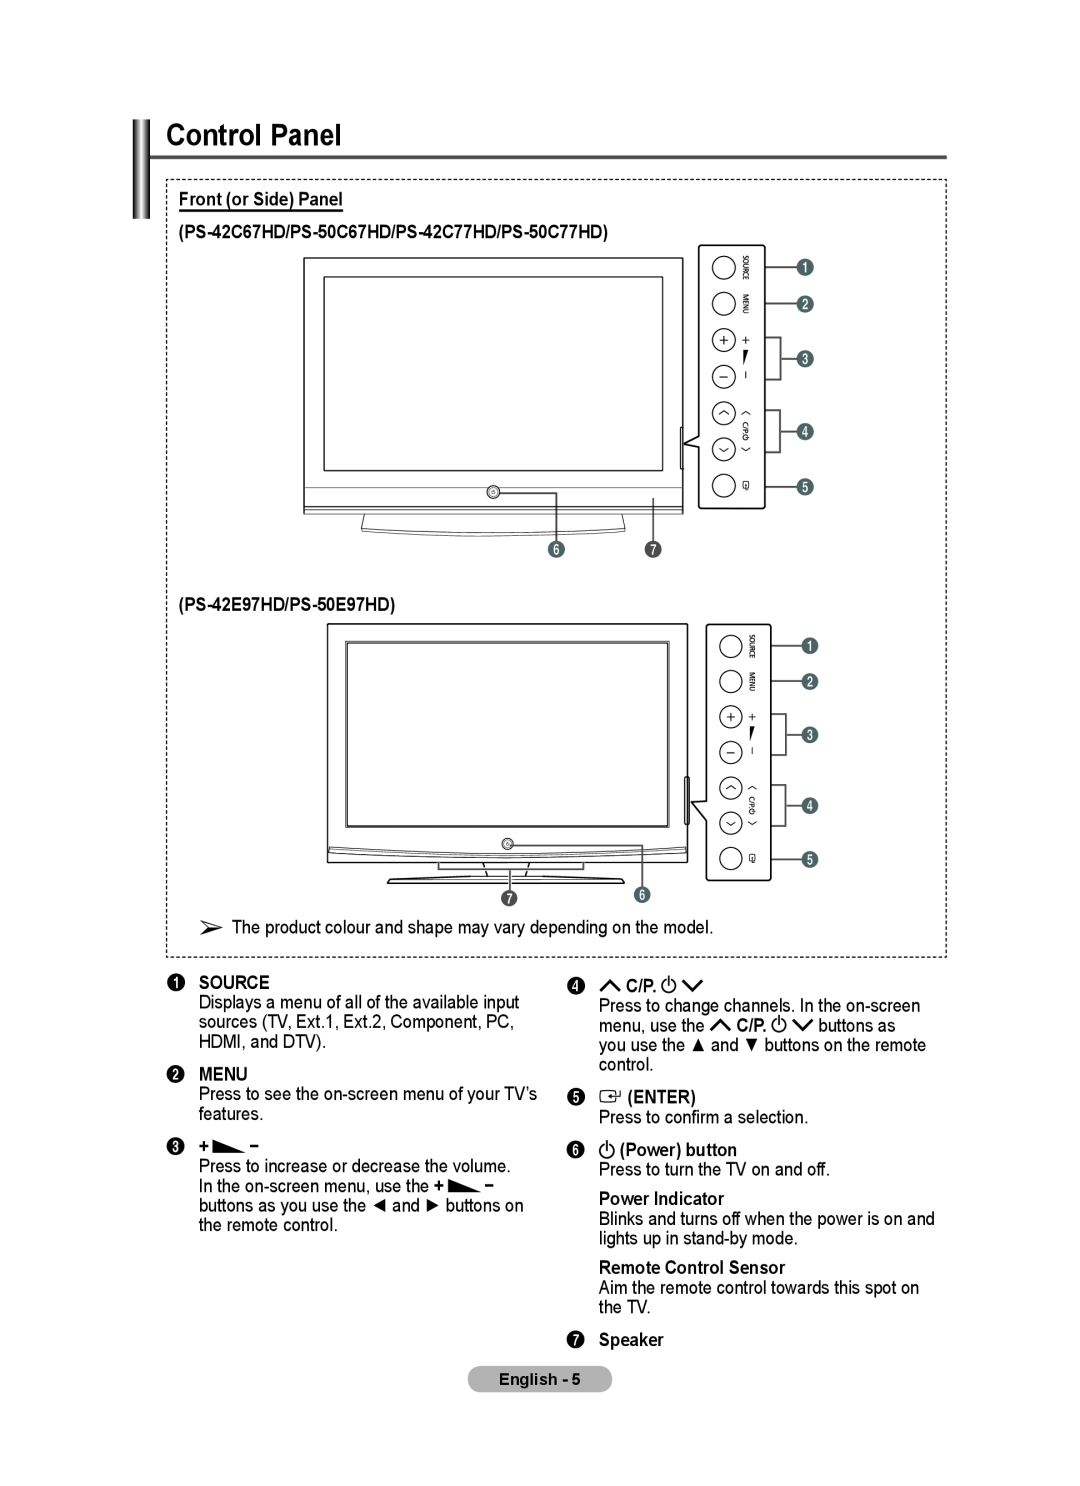 Samsung PS-42C67HD Control Panel, PS-42E97HD/PS-50E97HD, Source, Menu, 3 +, menu, use the, buttons as, control, Enter 